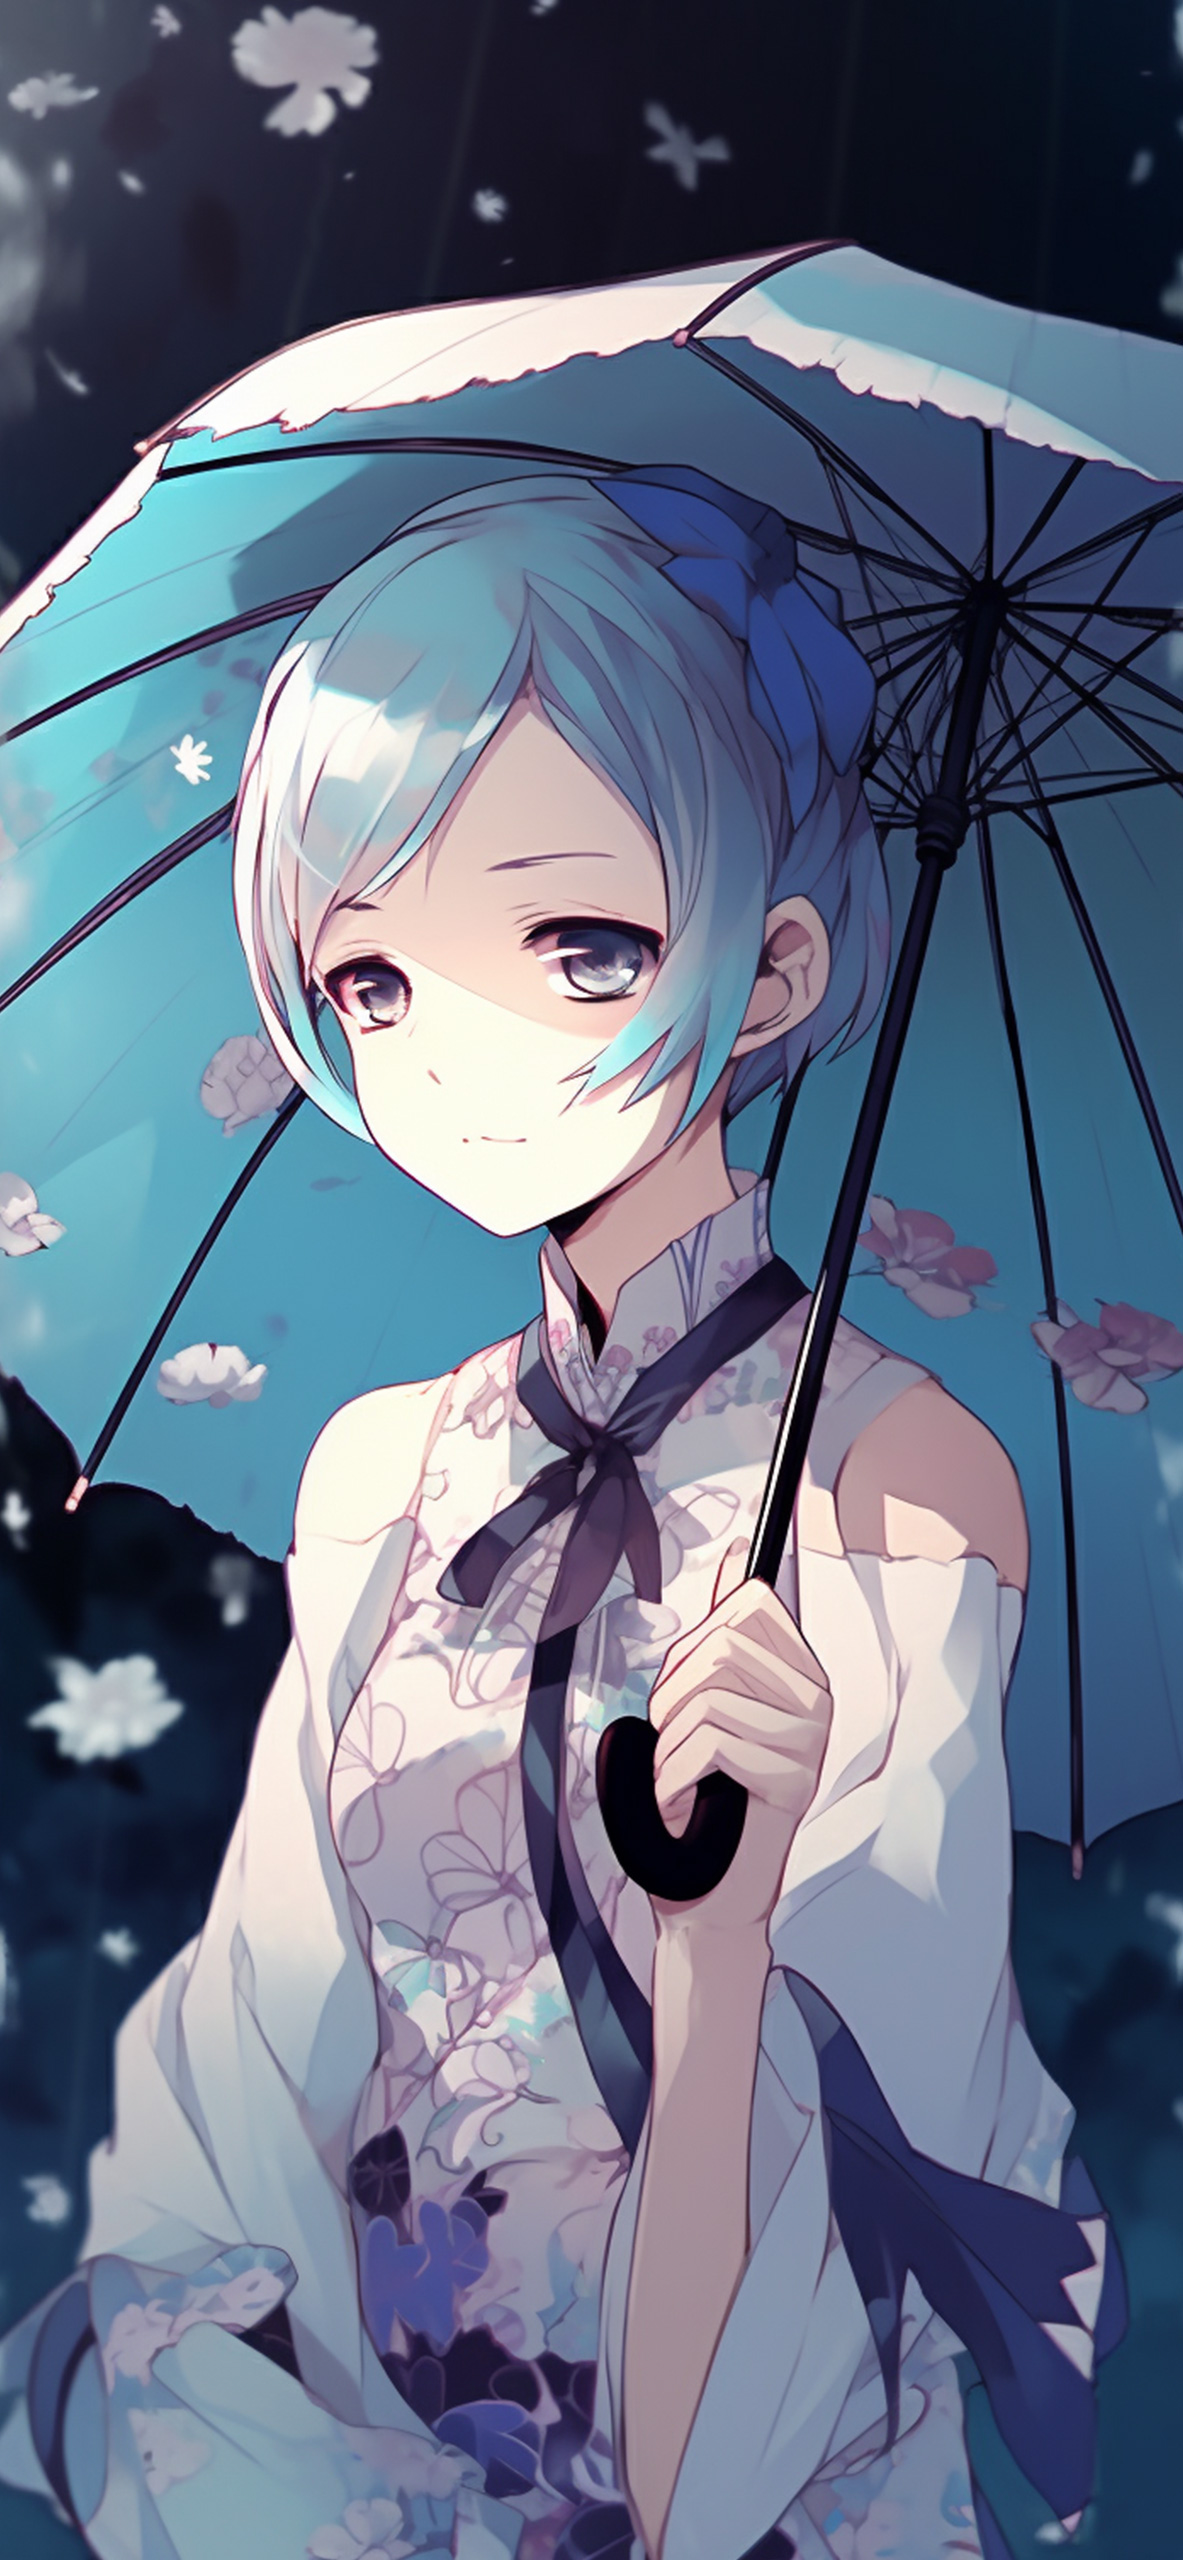 Drizzle Anime Girl With Umbrella Wallpaper 4K